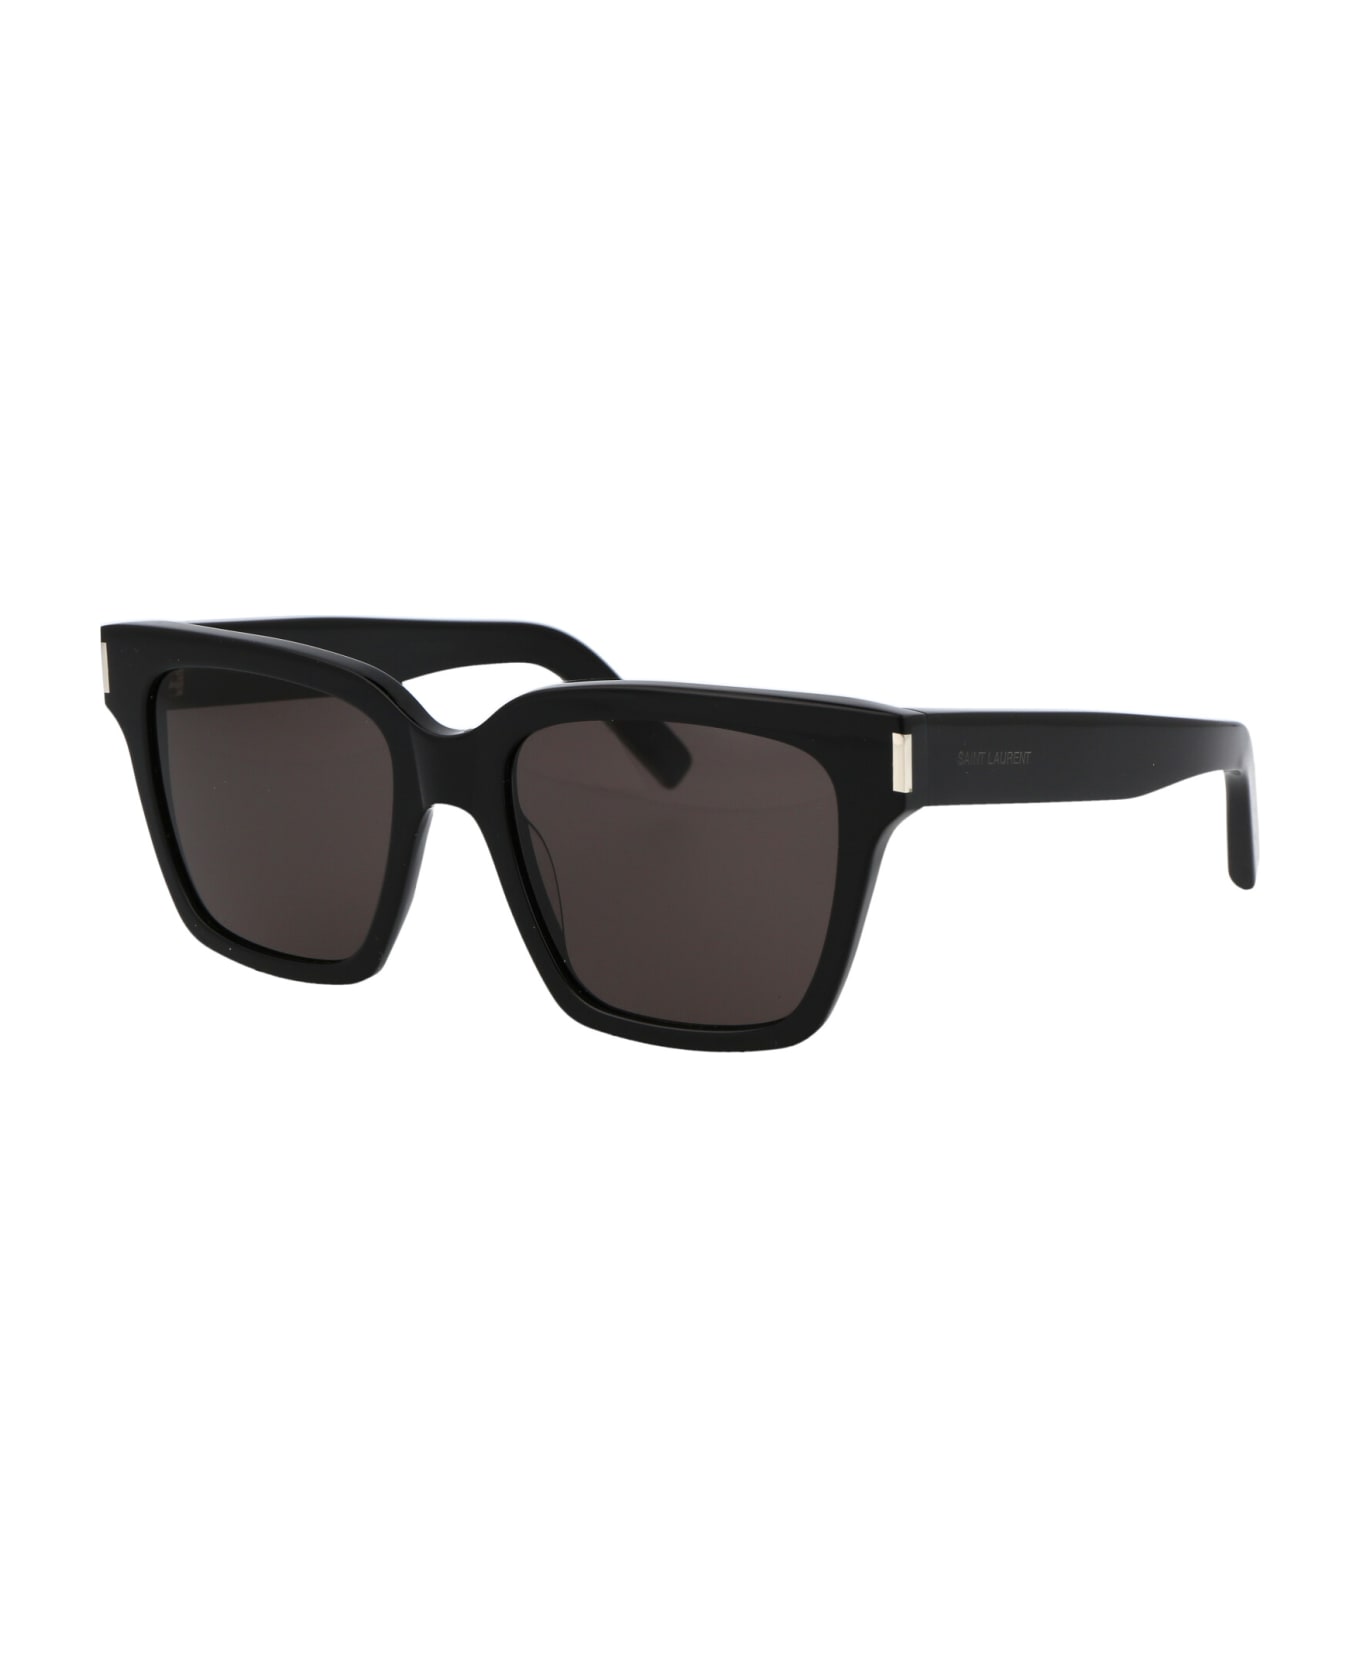 Saint Laurent Eyewear Sl 507 Sunglasses - 001 BLACK BLACK GREY